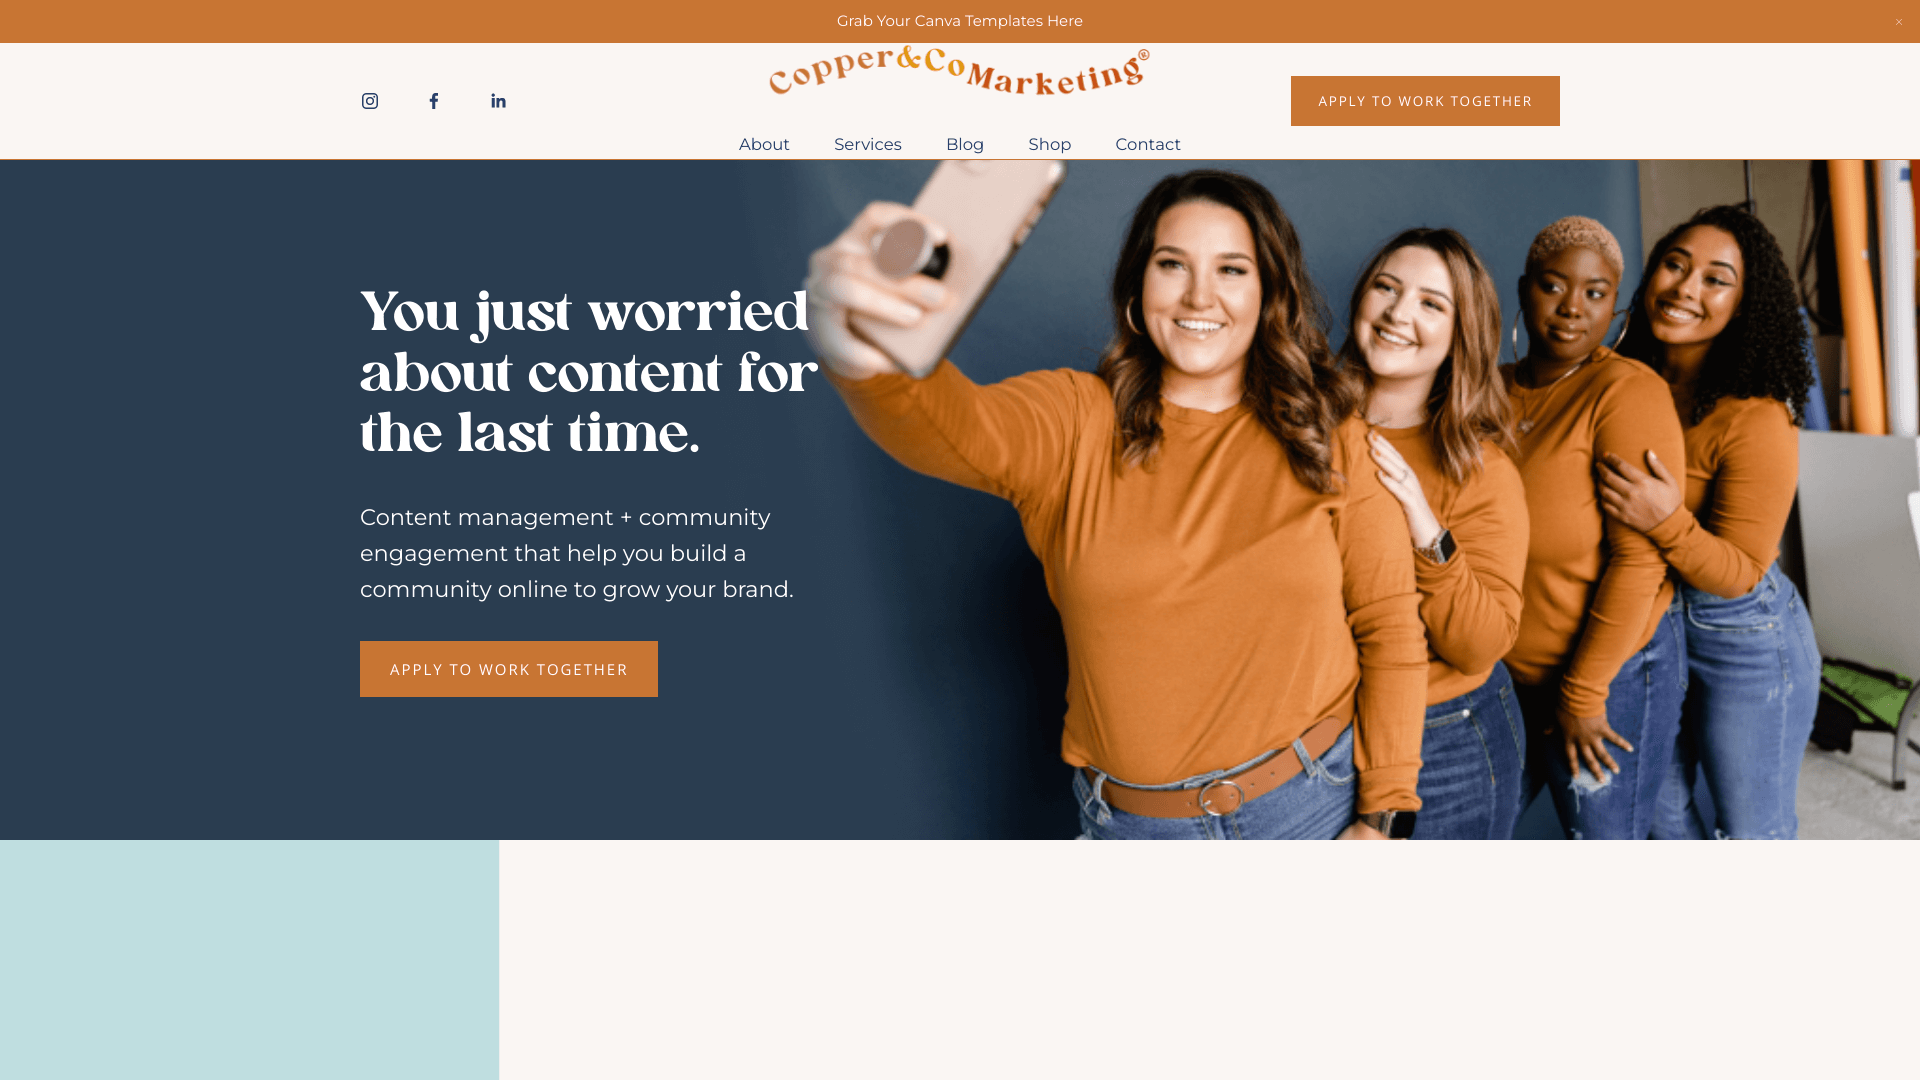 Screenshot of the Copper & Co. Marketing website